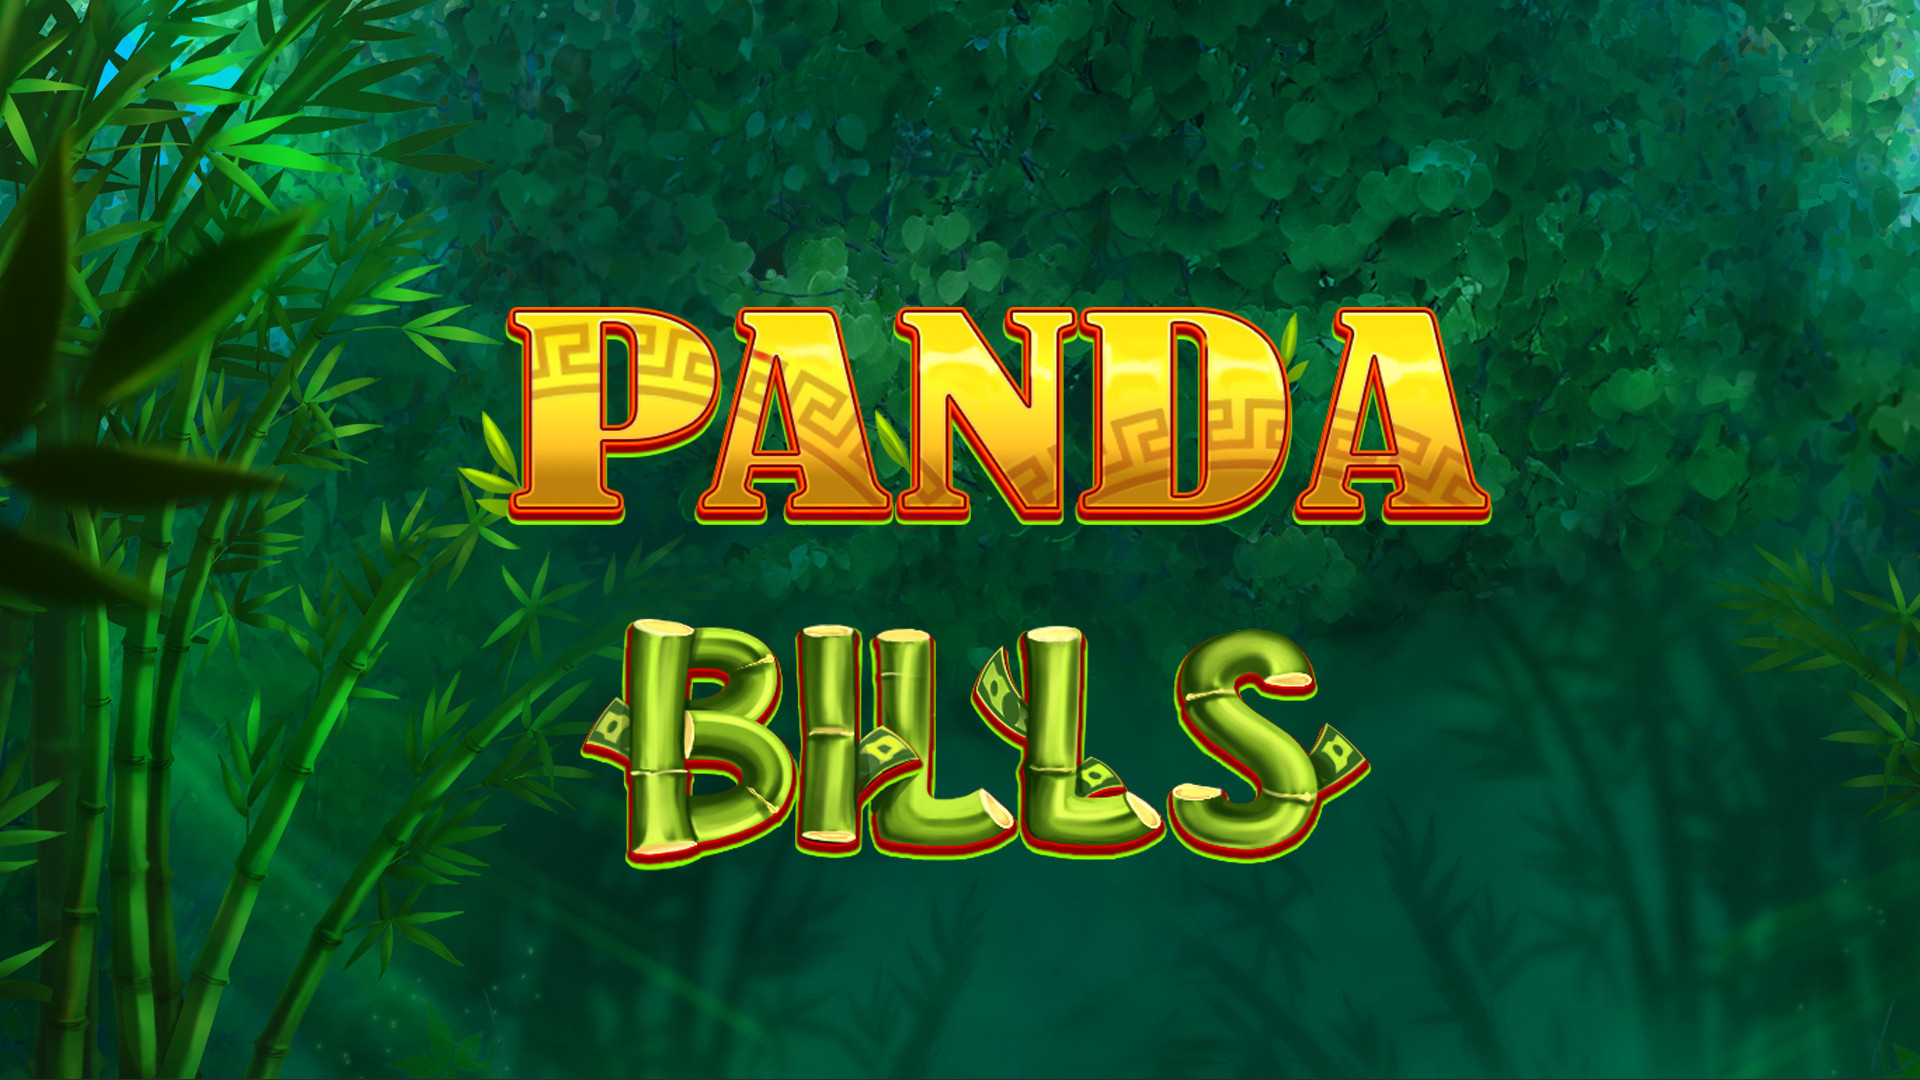 Panda Bills